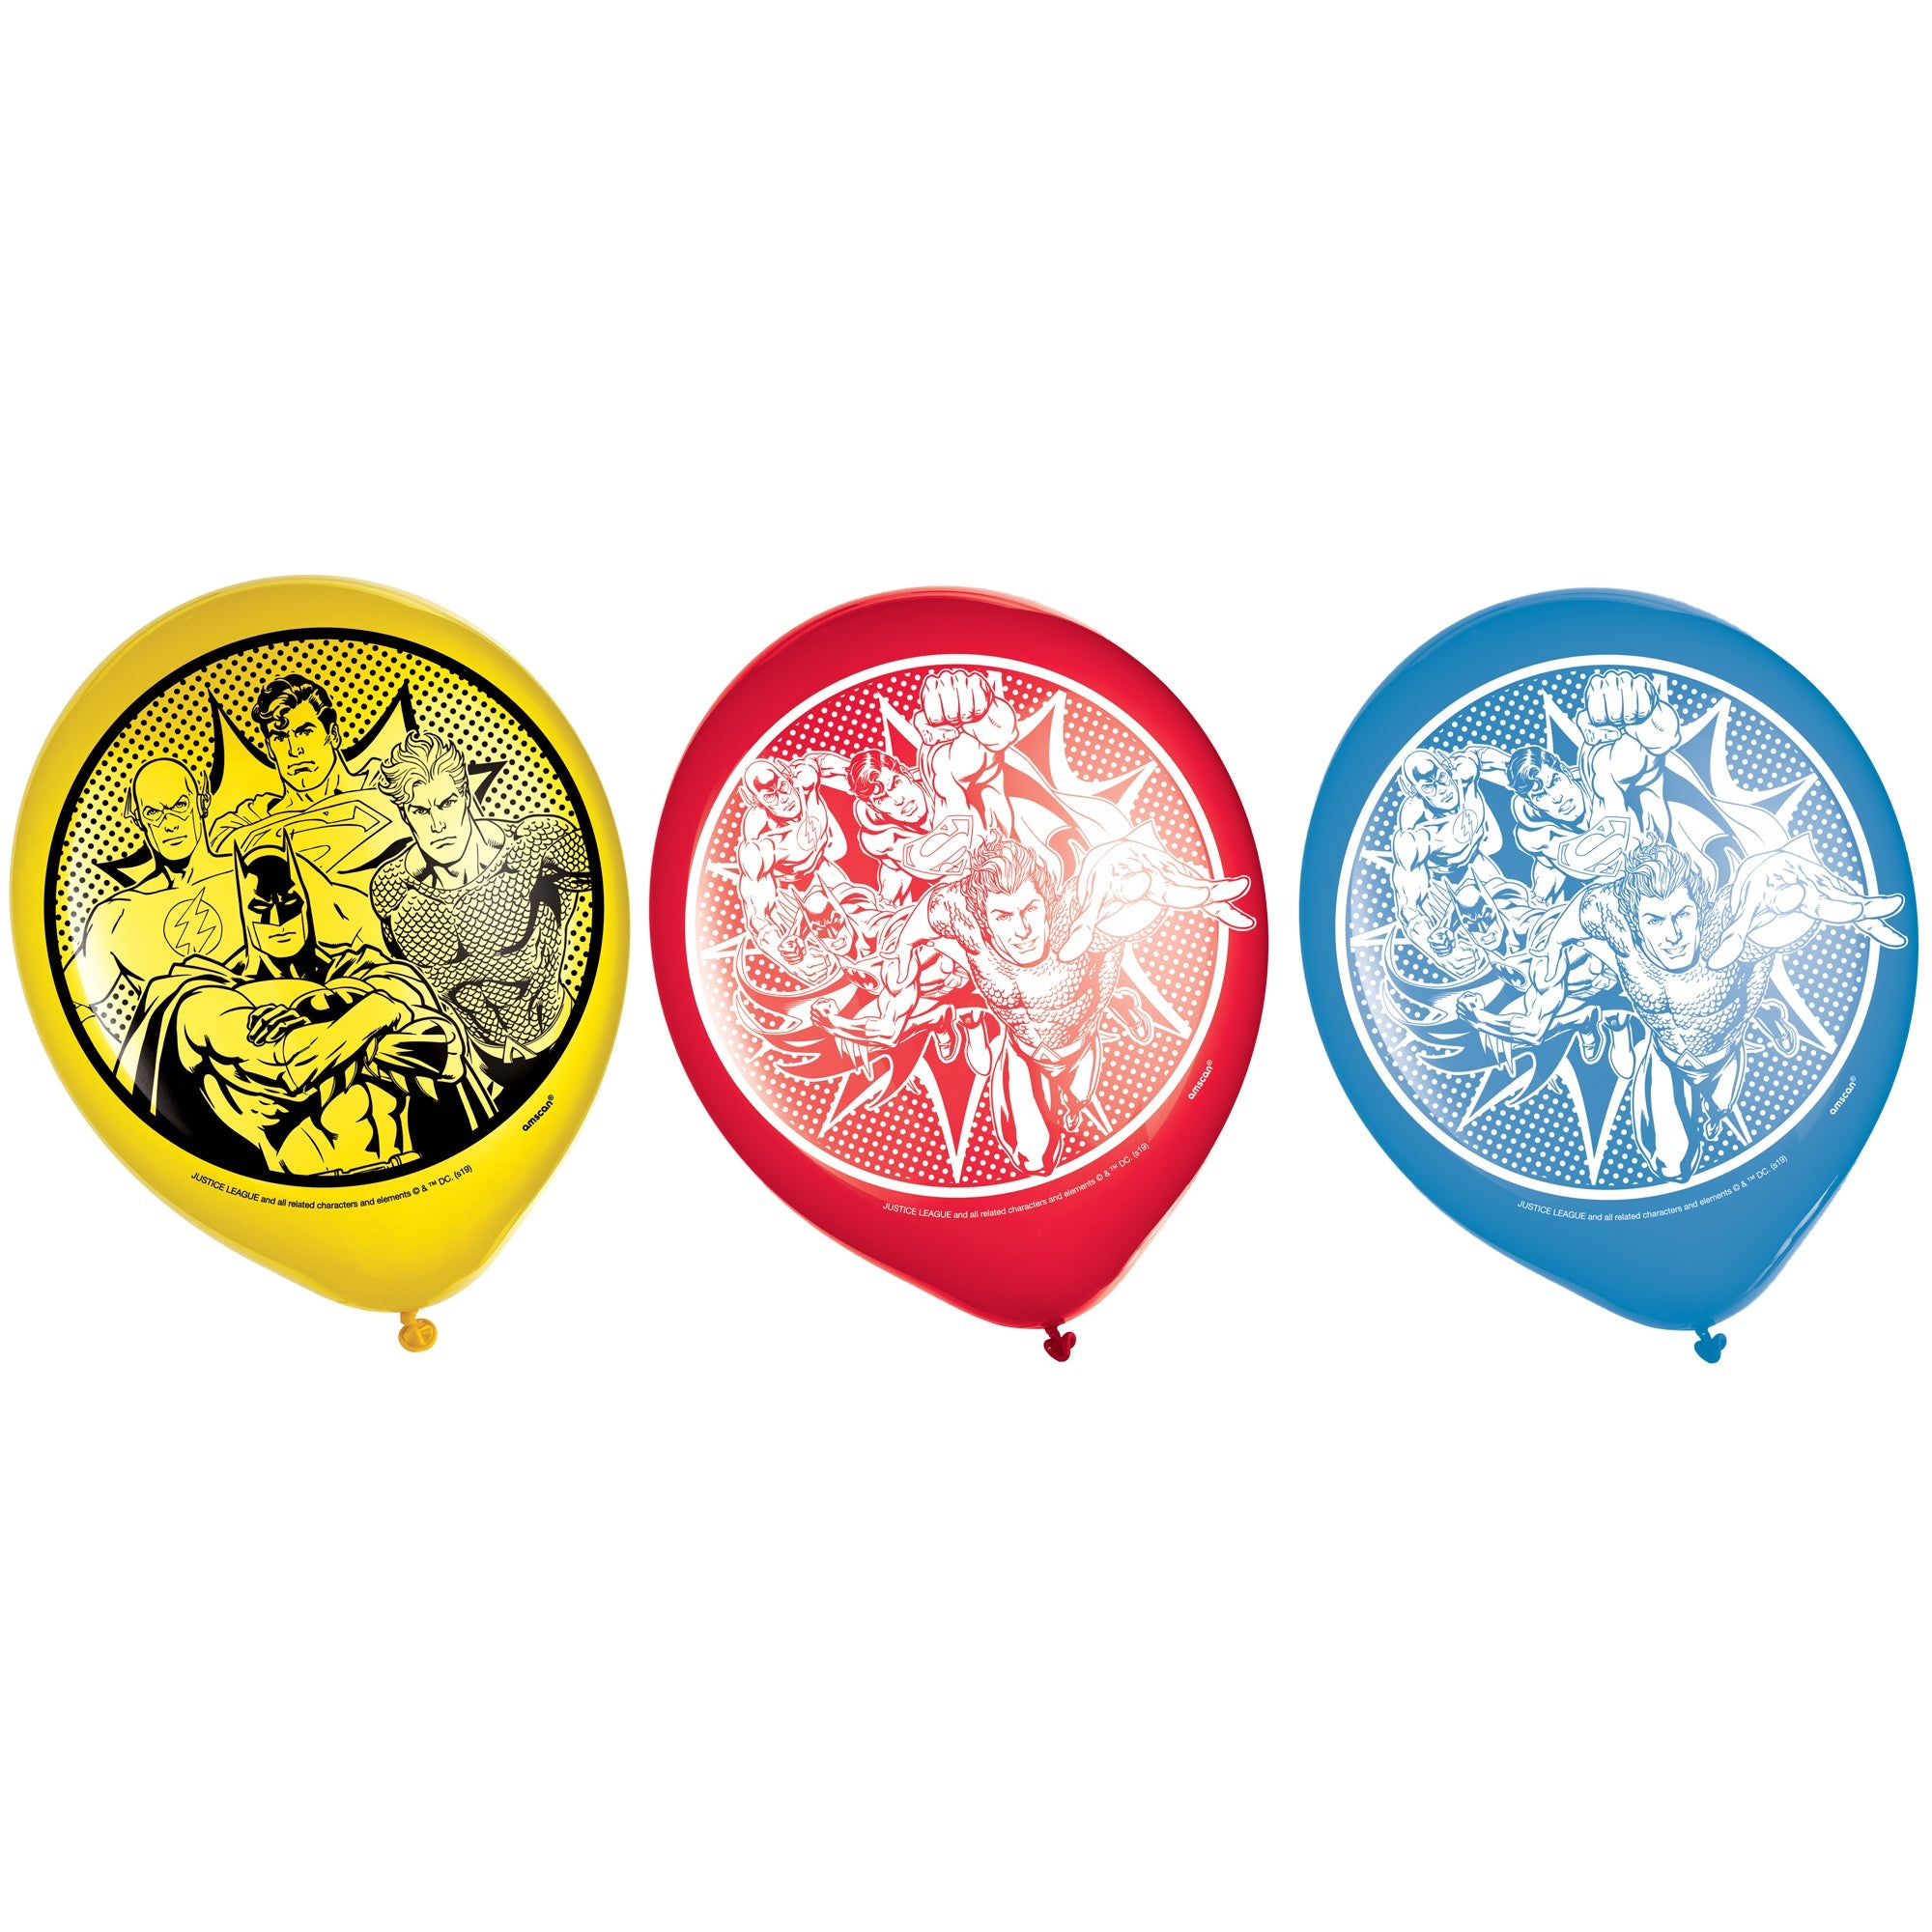 Justice League Heroes Unite Printed Latex Balloons